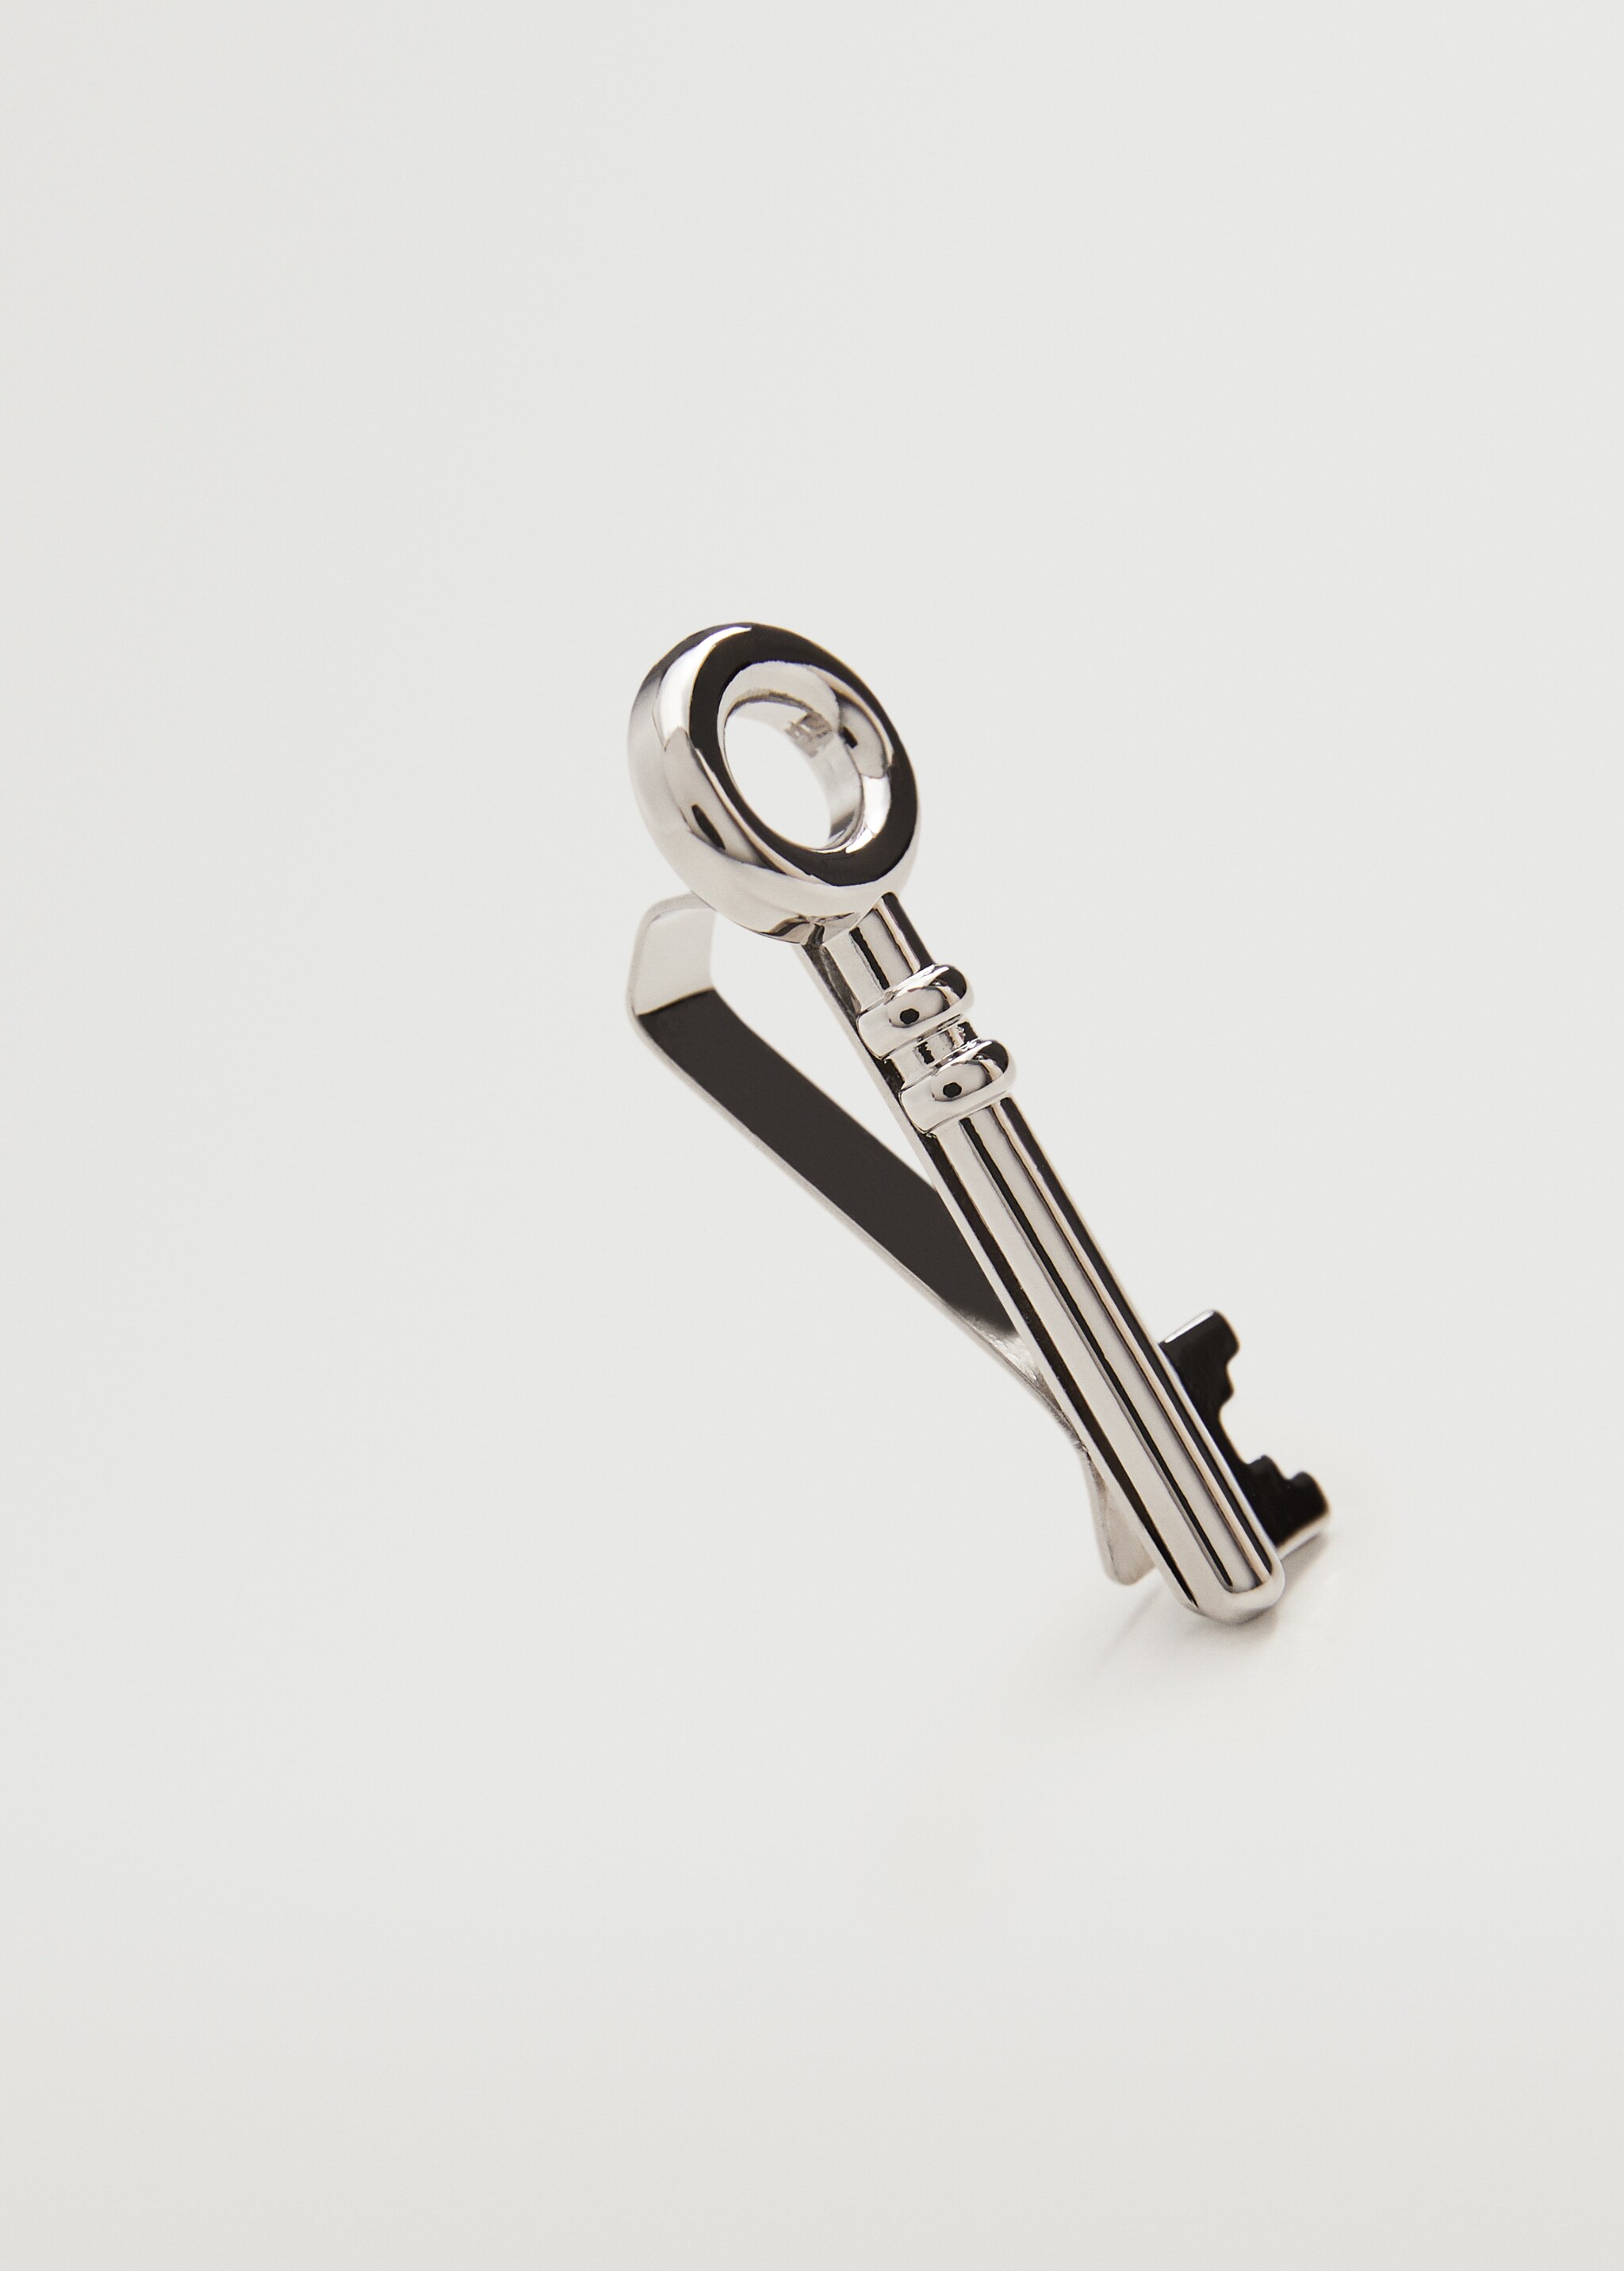 Metal key clasp - Medium plane